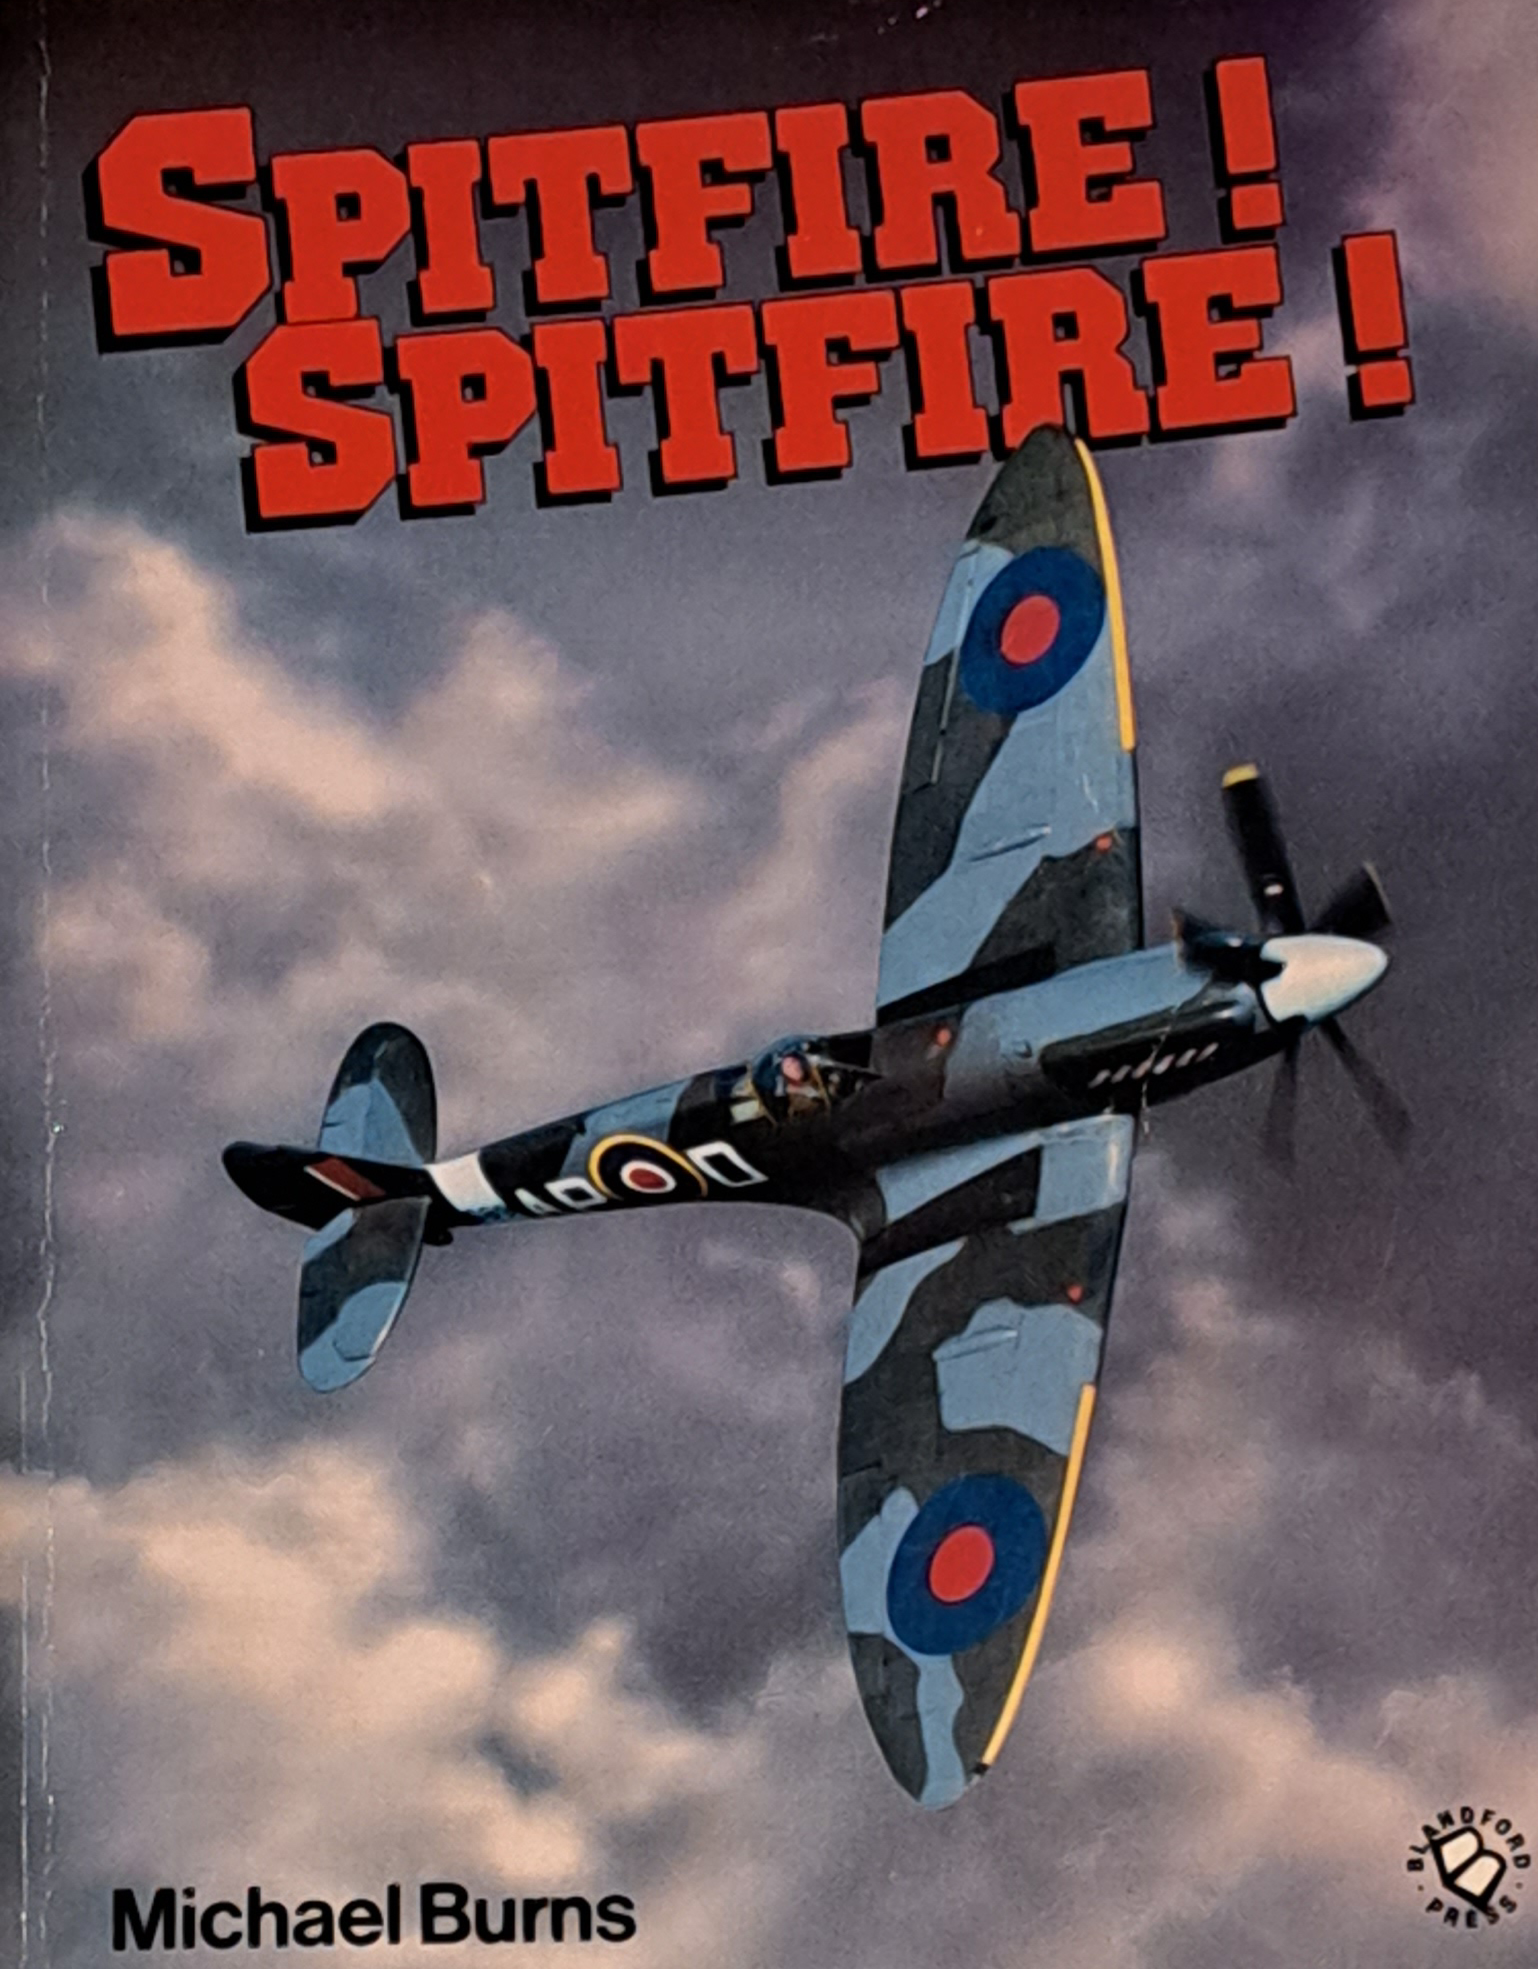 Spitfire! Spitfire! by MIchael Burns